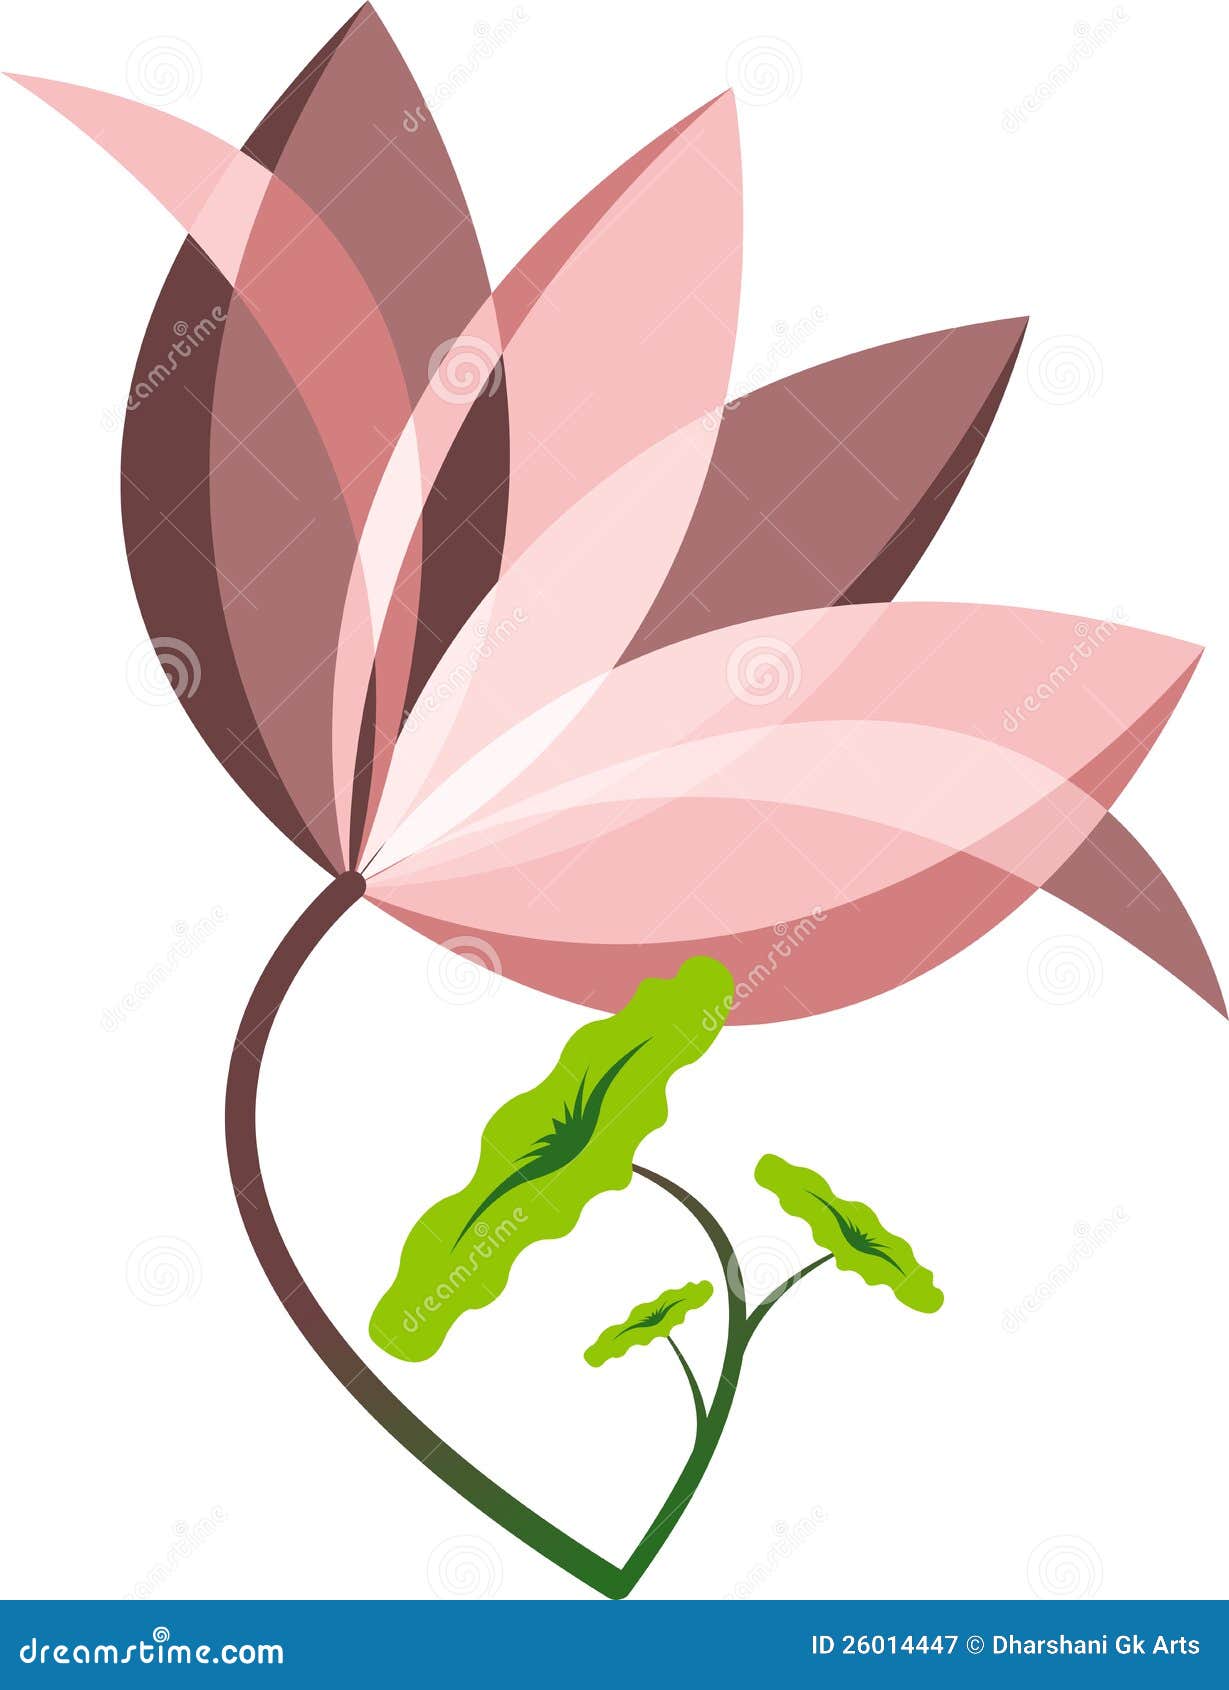 Lotus Logo Royalty Free Stock Photography - Image: 26014447